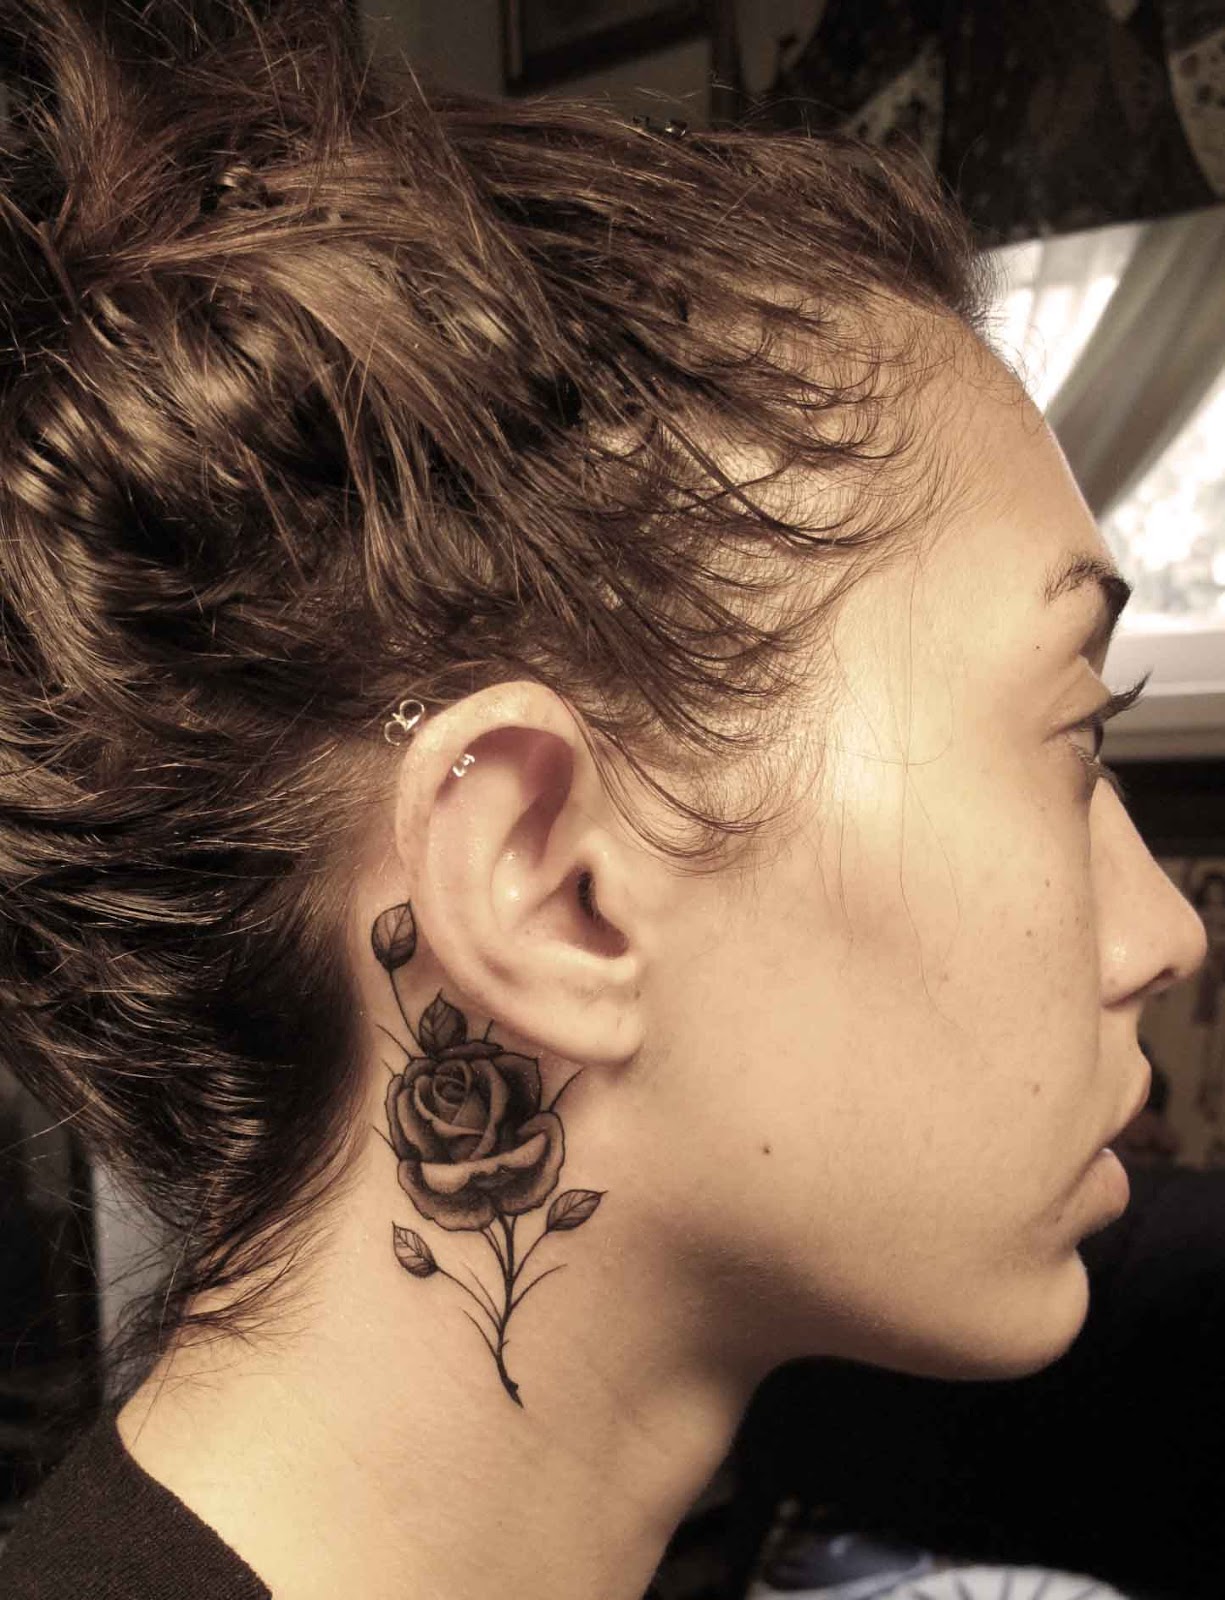 1990Tattoos Small Tattoos On Ear Behind